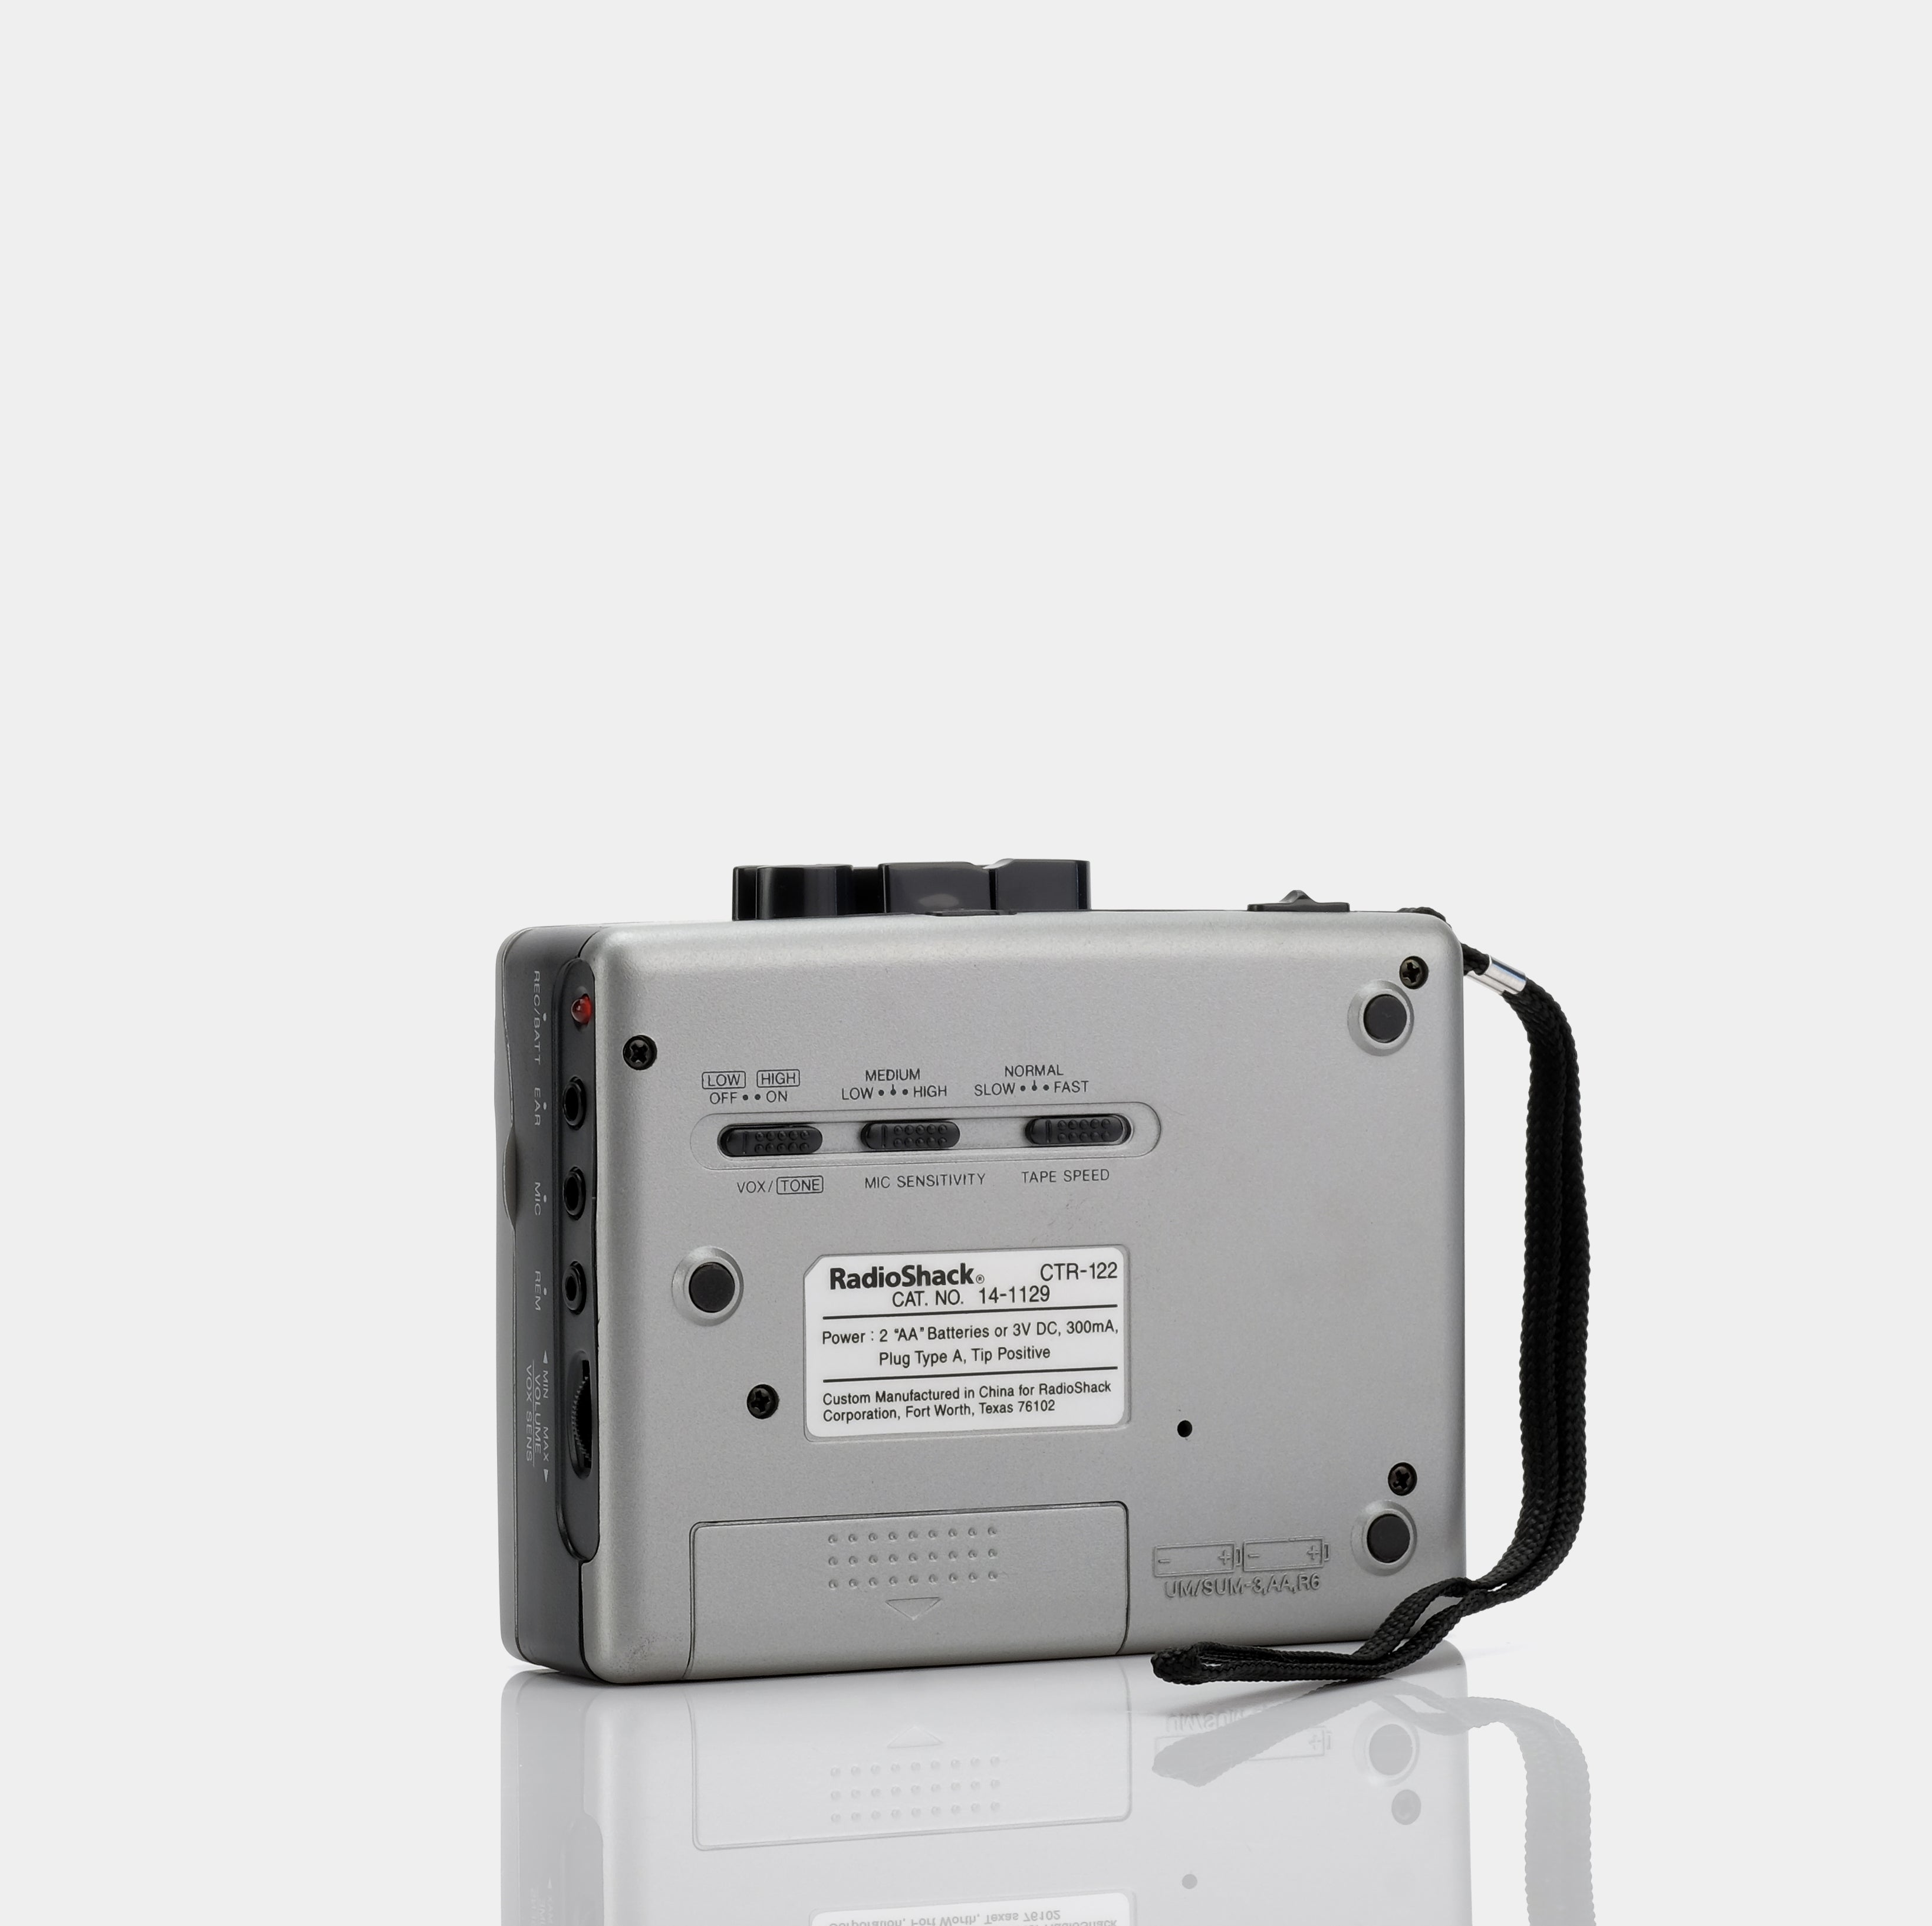 RadioShack CTR-122 Portable Cassette Player/Recorder